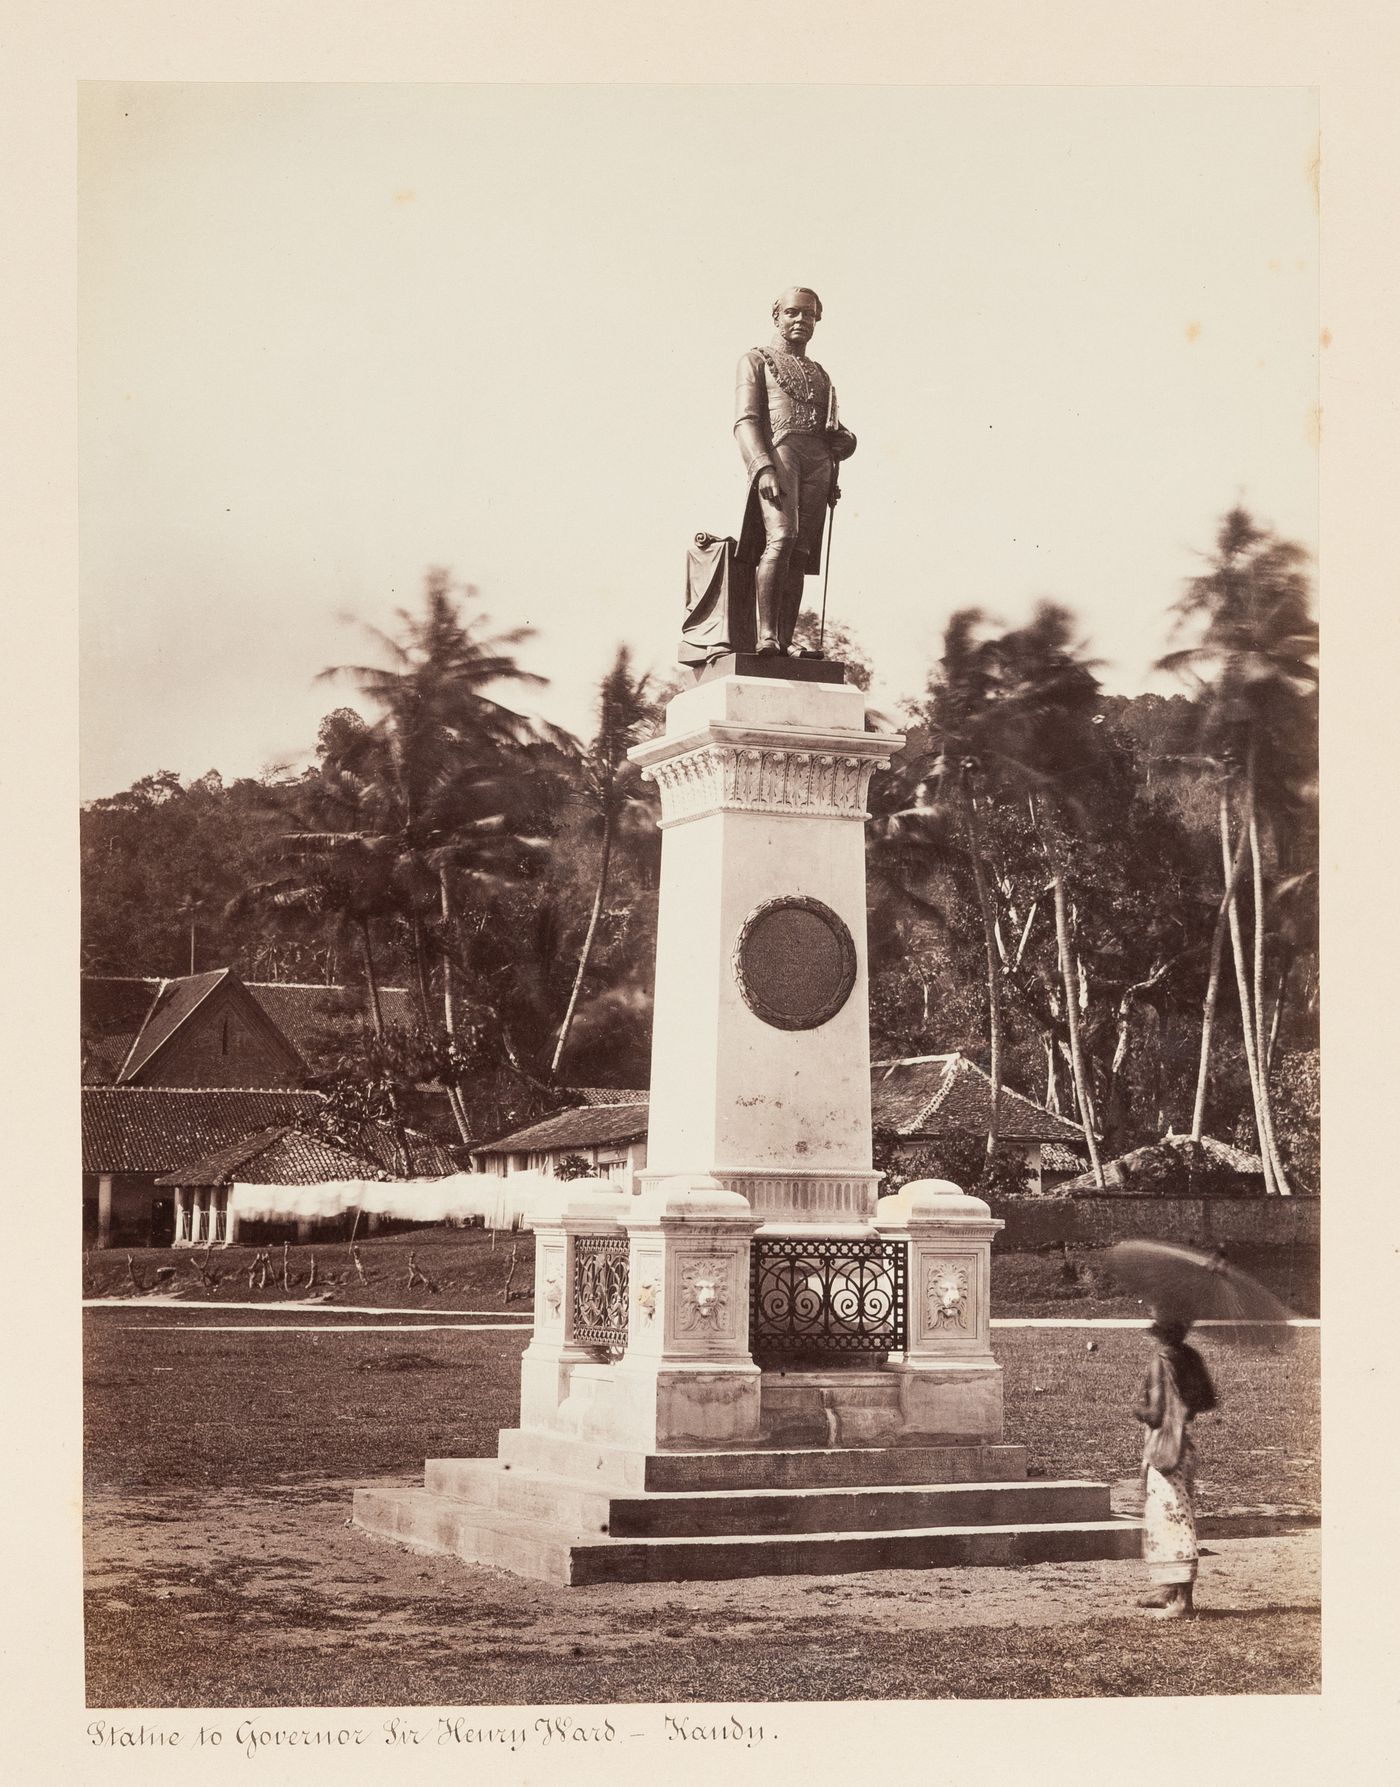 View of the statue of Sir Henry George Ward, Kandy, Ceylon (now Sri Lanka)